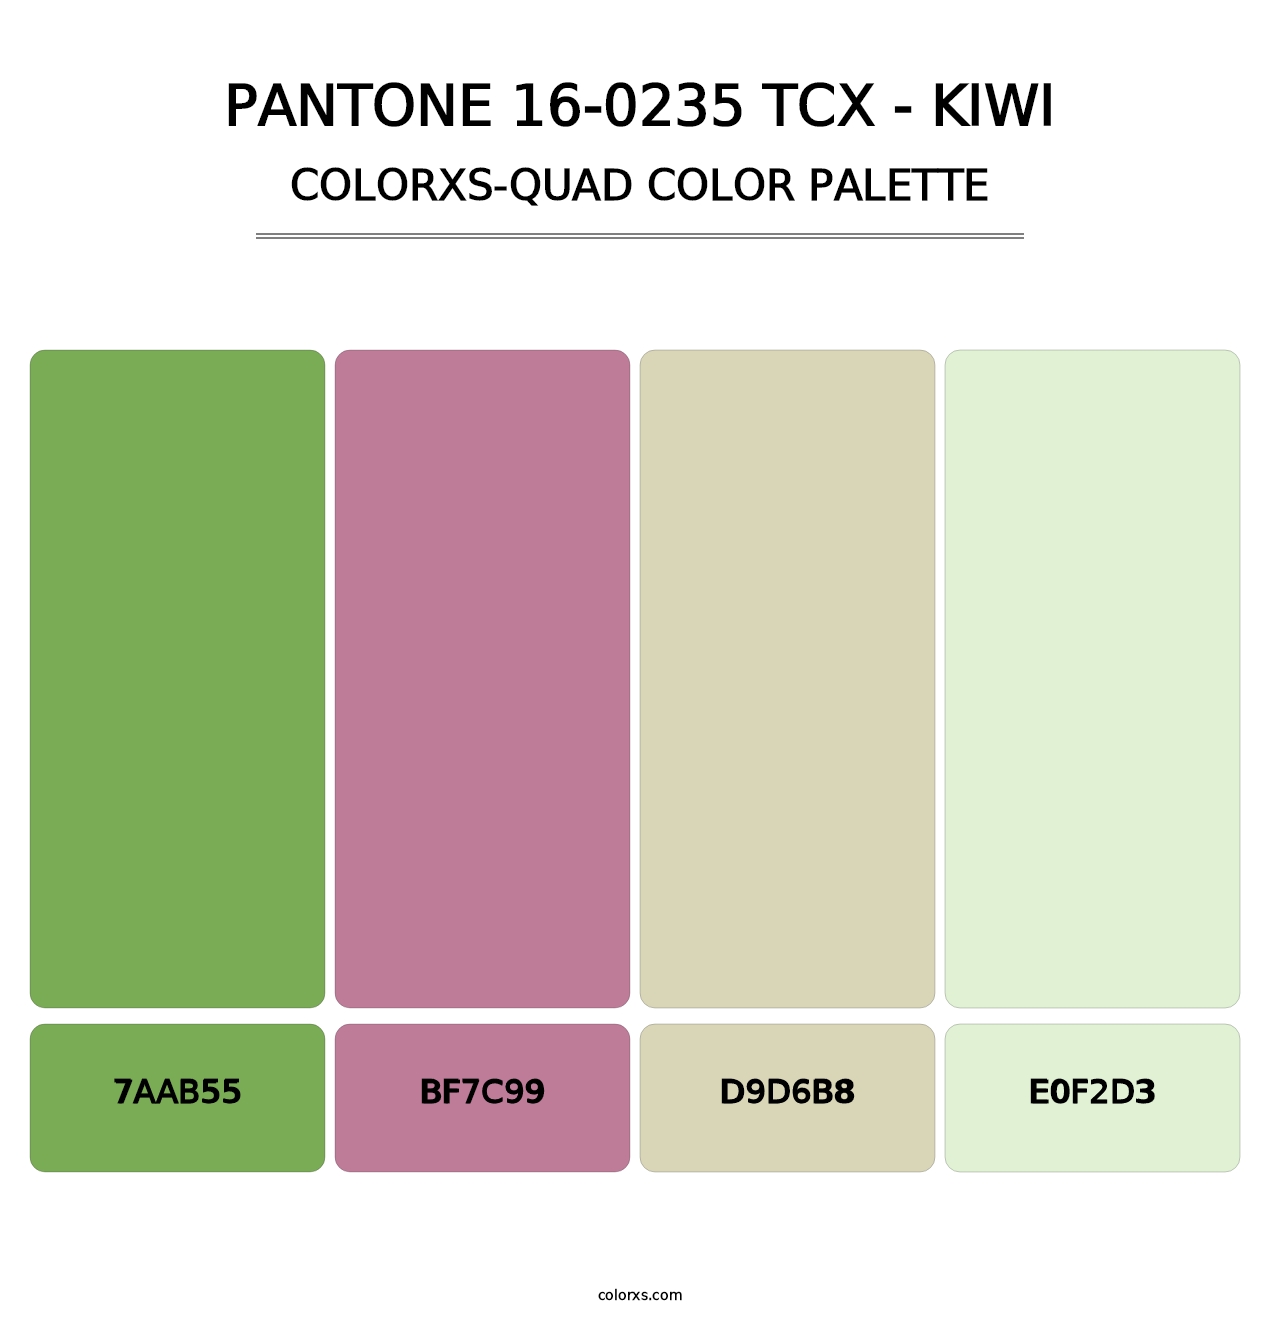 PANTONE 16-0235 TCX - Kiwi - Colorxs Quad Palette